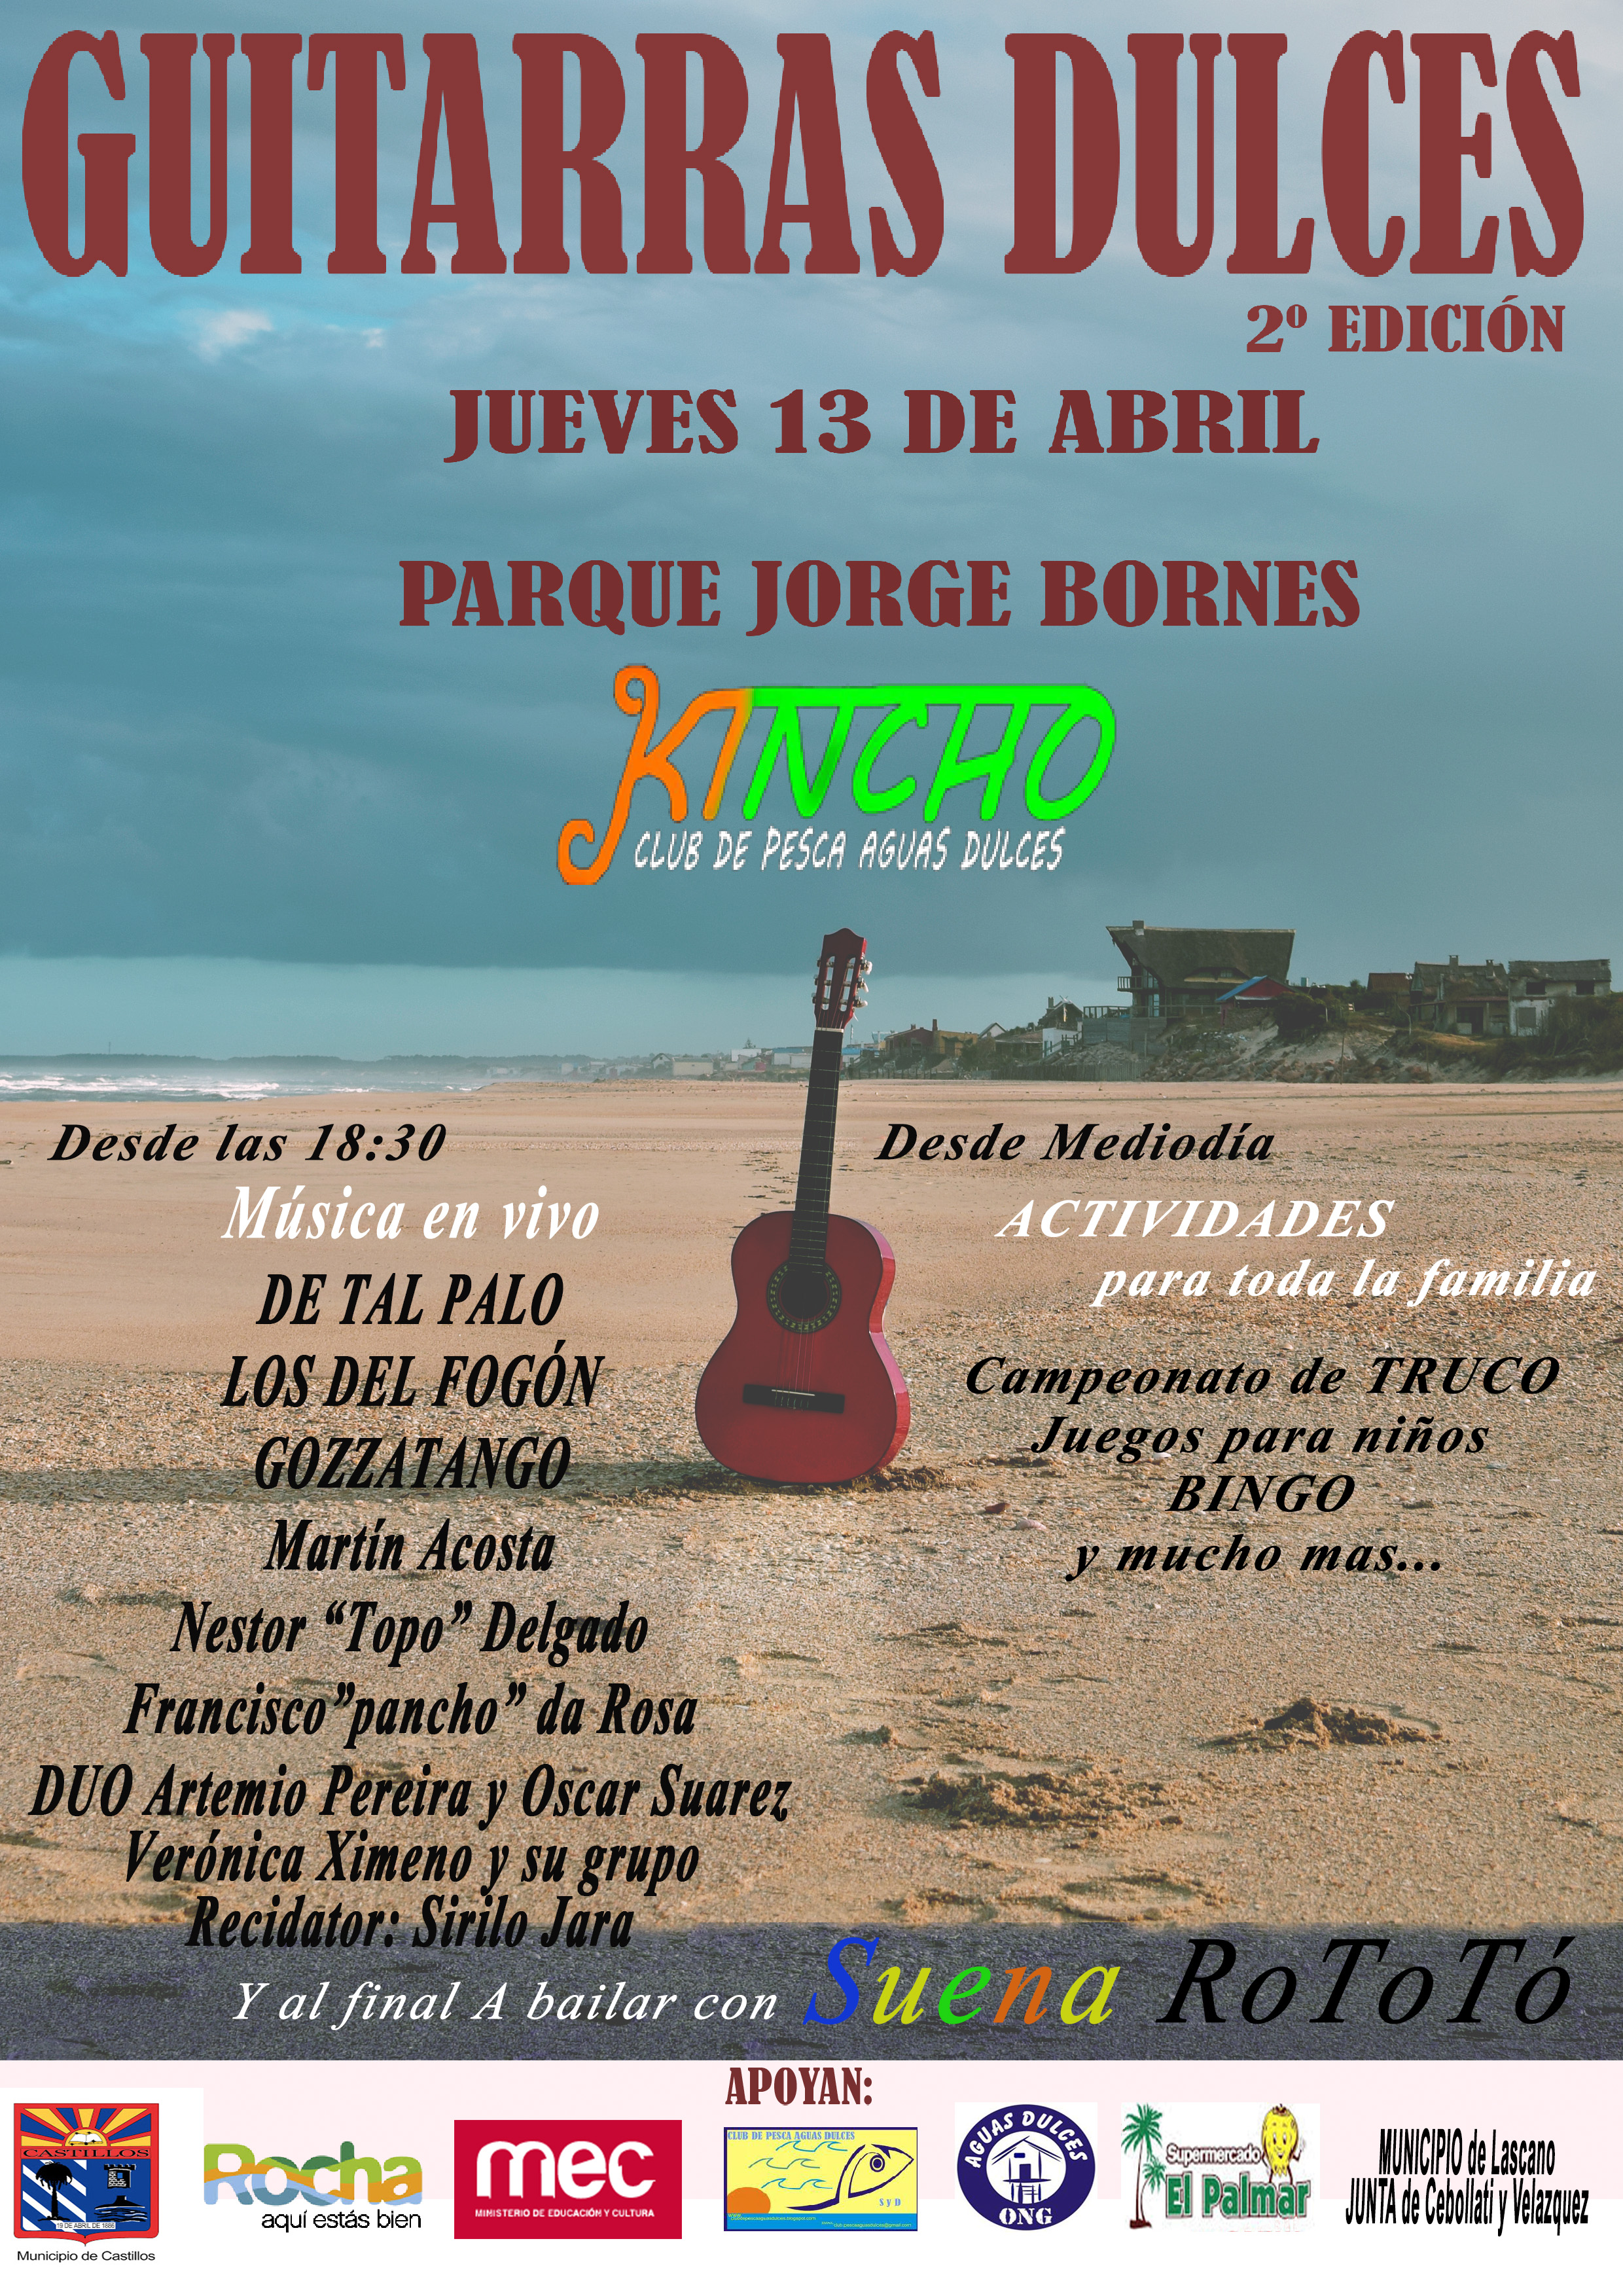 Segunda edición del Festival de Folklore en Aguas Dulces “Guitarras Dulces”